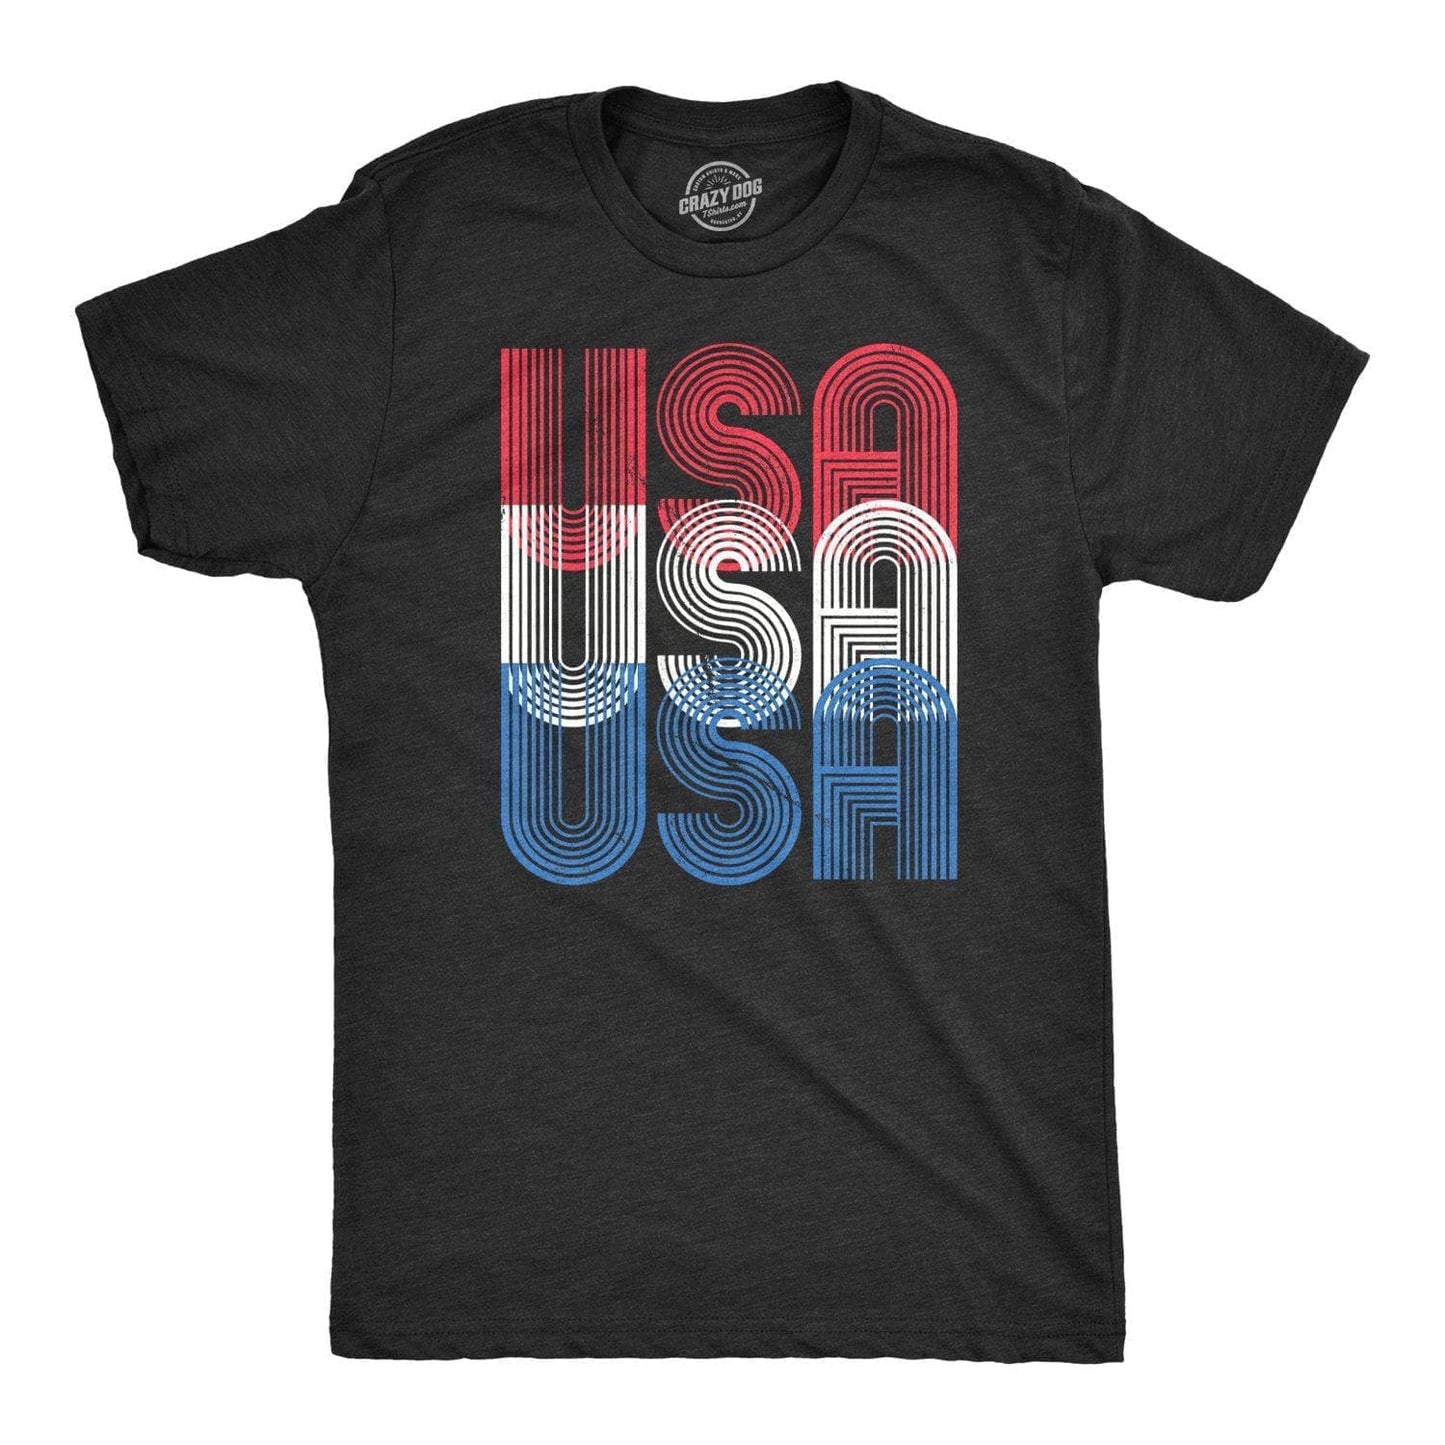 USA! USA! USA! Men's T-Shirt